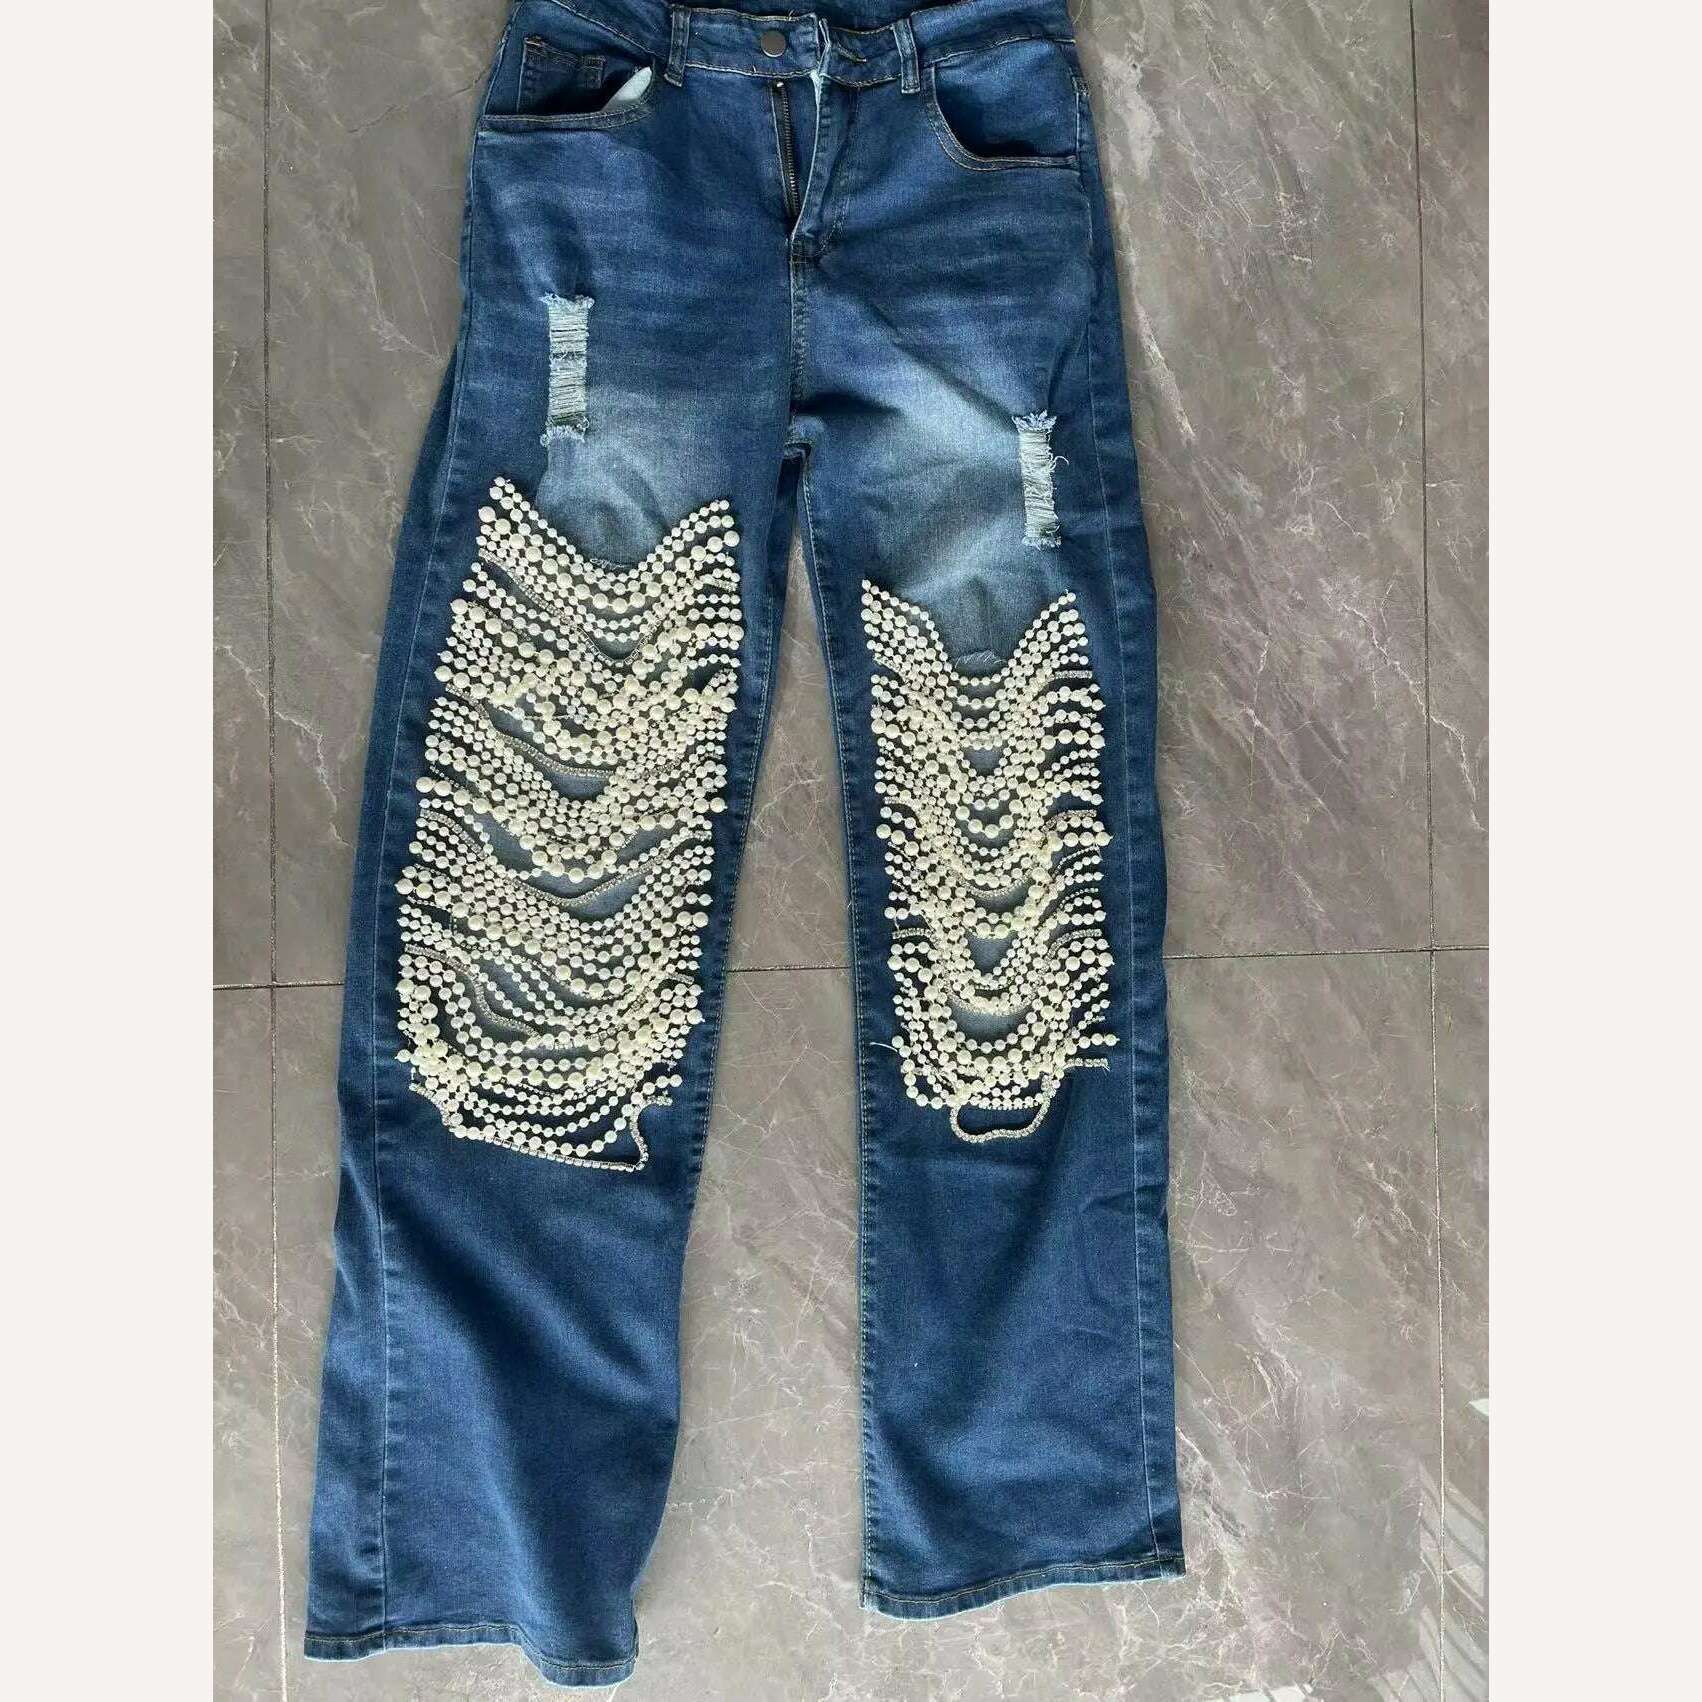 KIMLUD, Beachapche   Straight Jeans Women Holes Pearls Diamond Rhinstones Solid High Waist Fashion Cotton High Street Denim Pants, DEEP BLUE / S, KIMLUD Womens Clothes